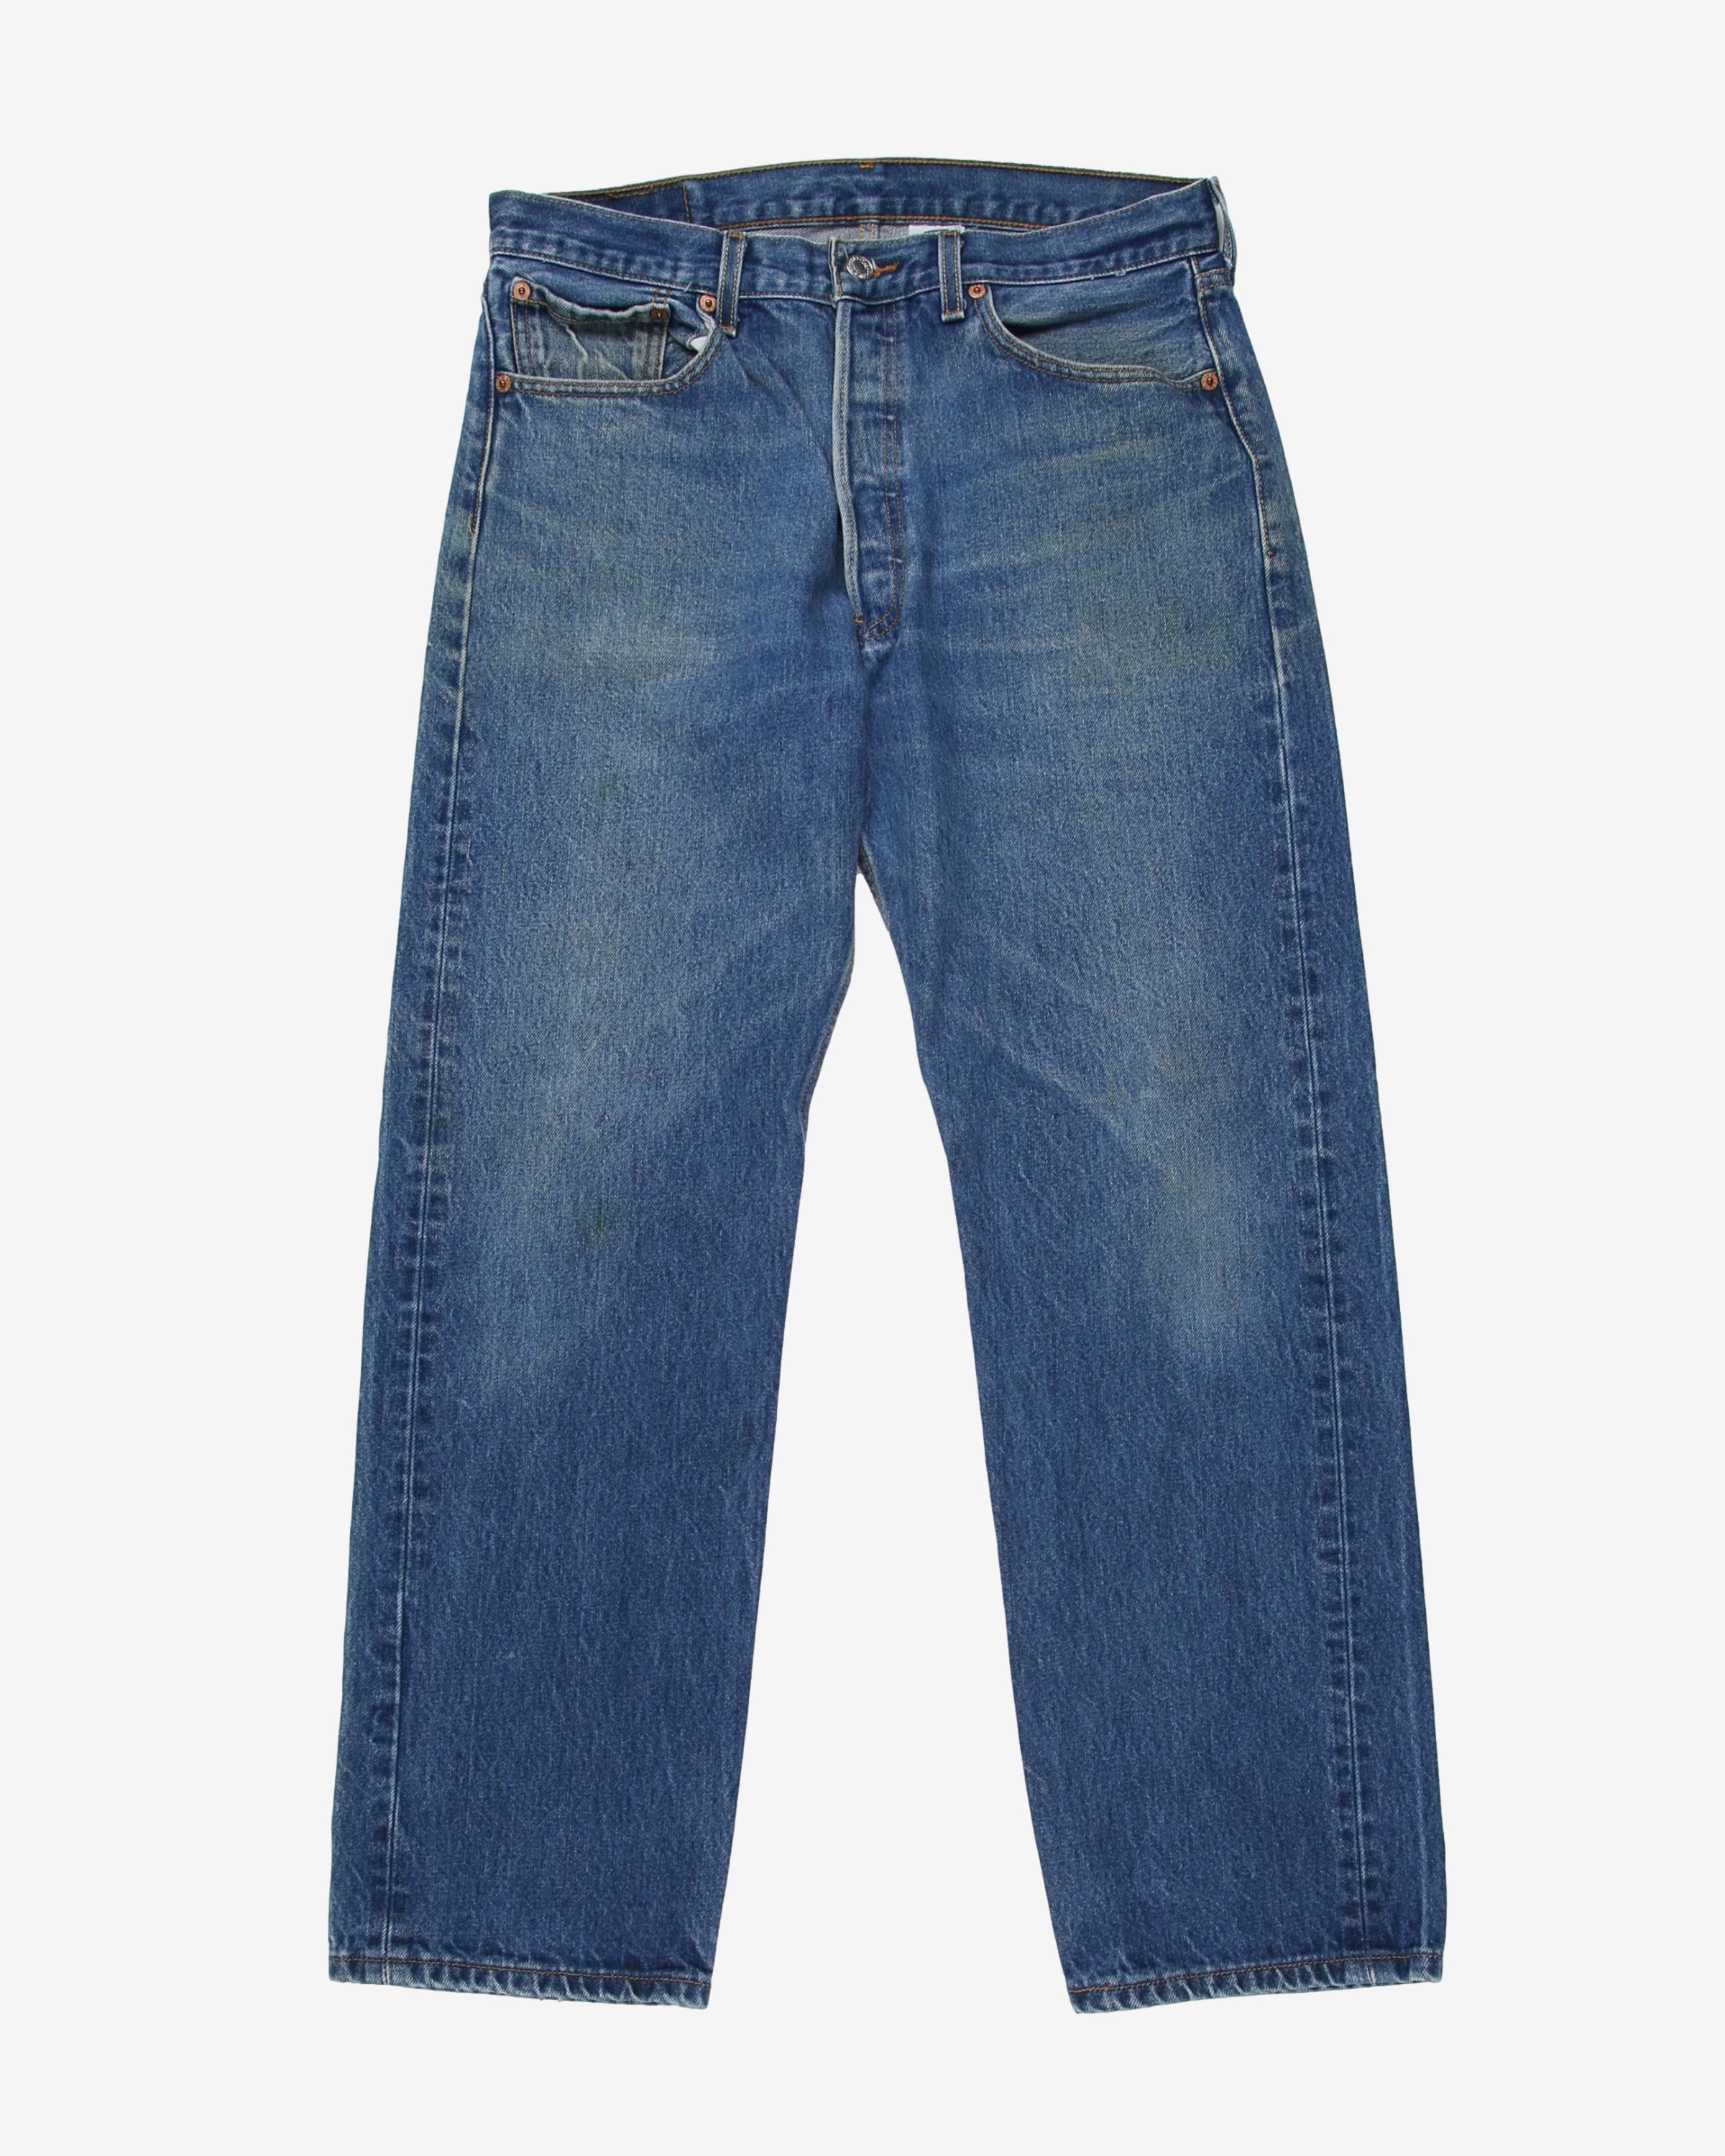 Vintage Levi's 501 Denim Dark Blue Jeans - W33 L28